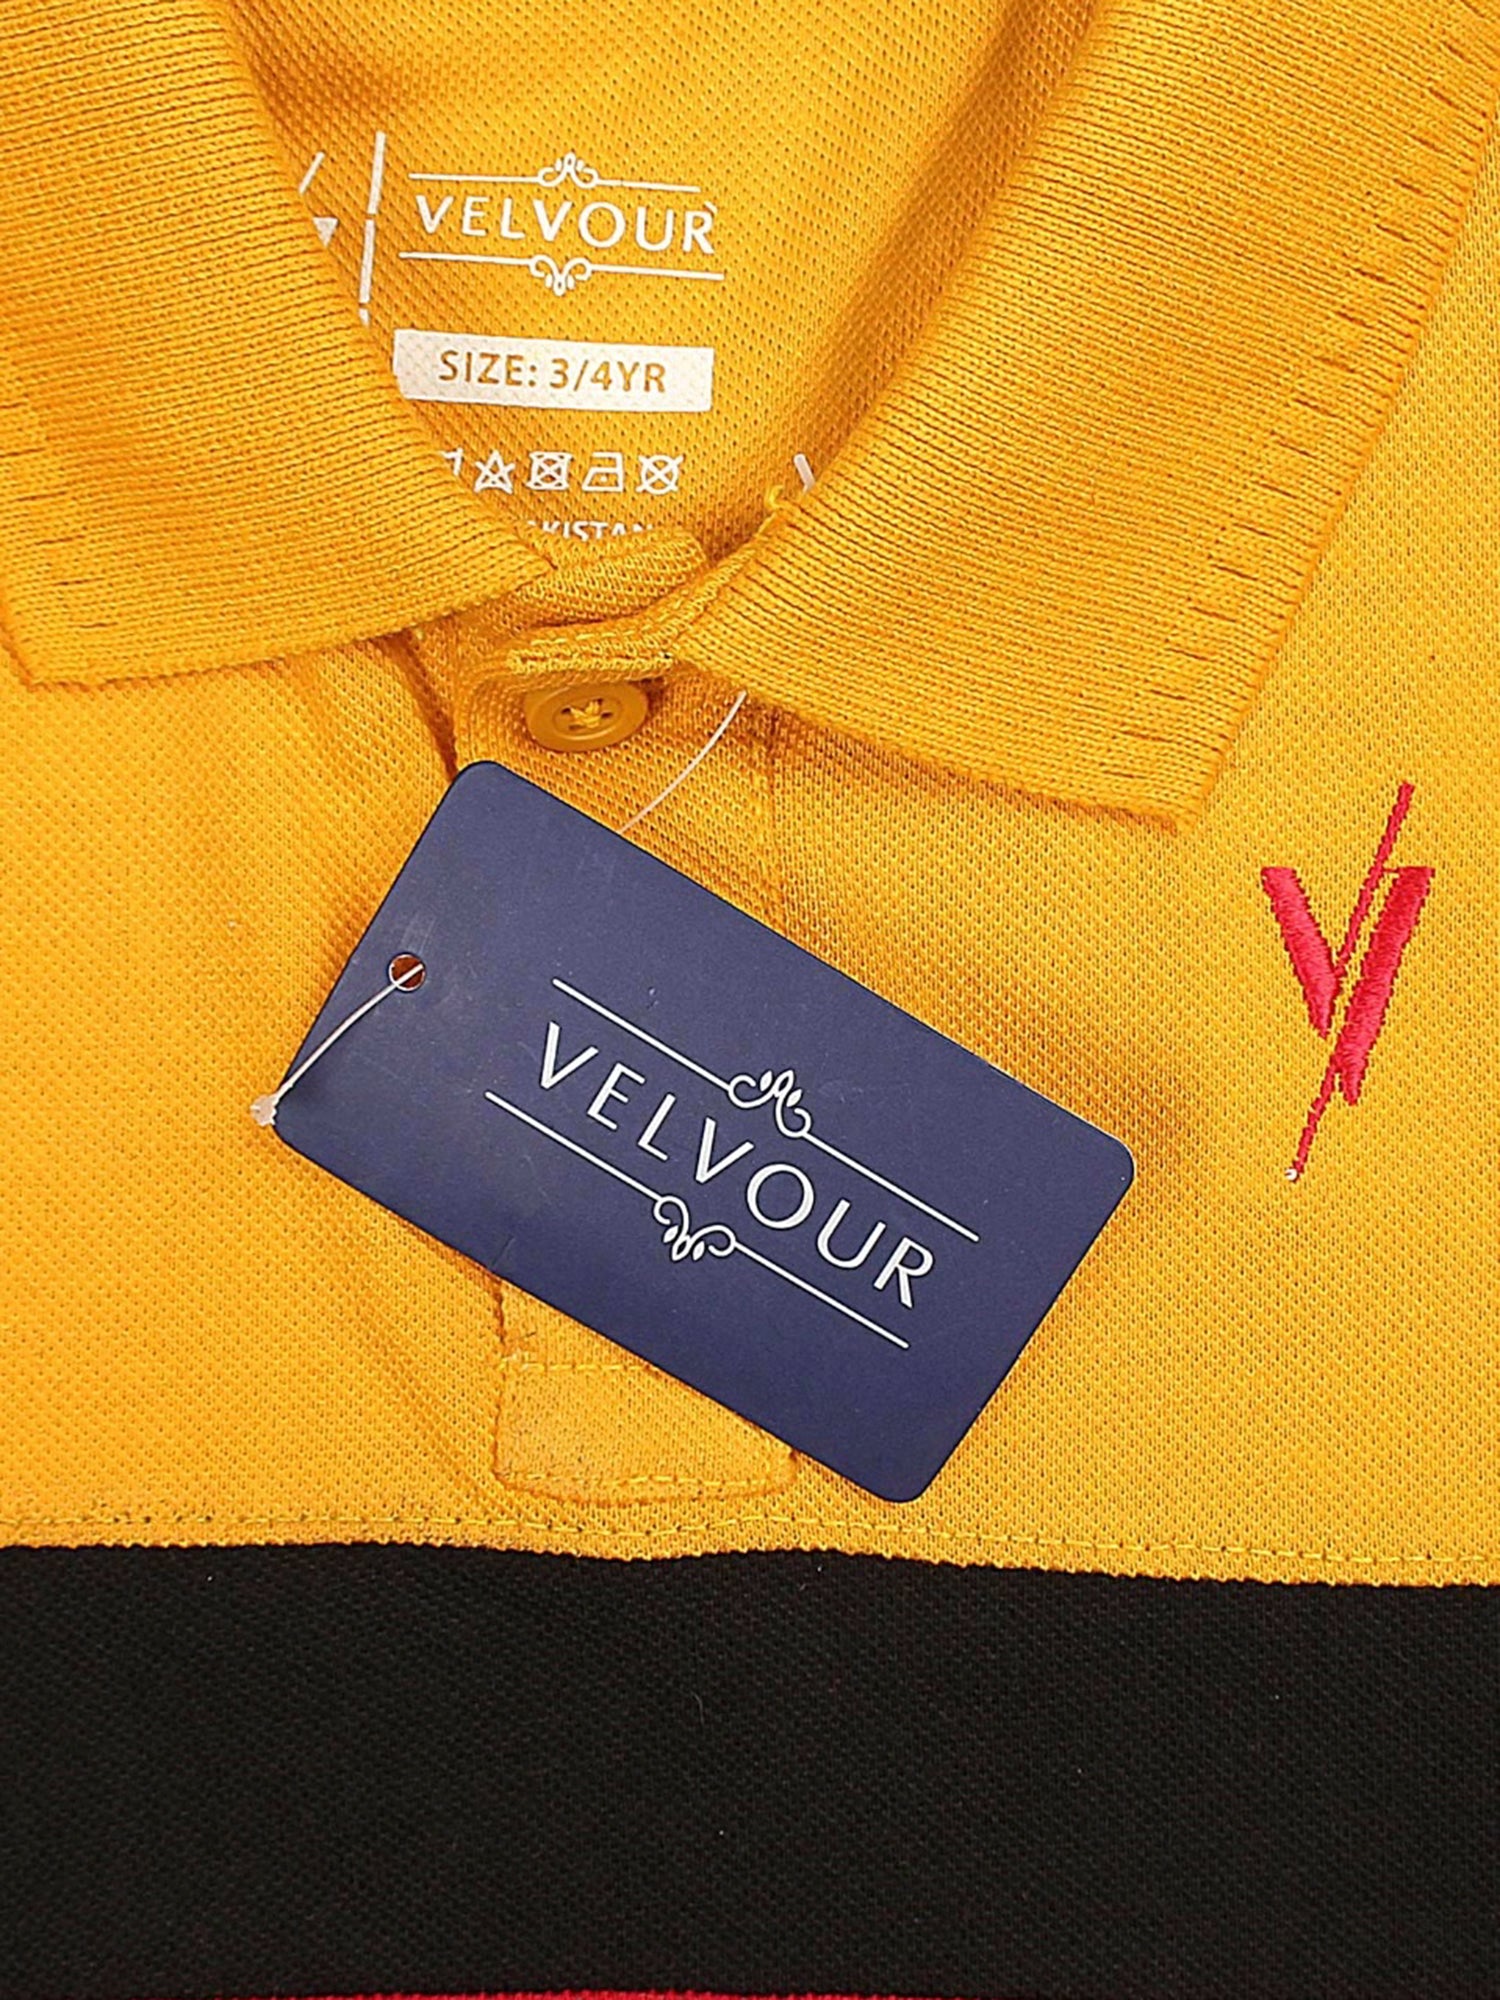 Polo Shirt Summer For Boys Art# VBP05-C - Velvour Shop